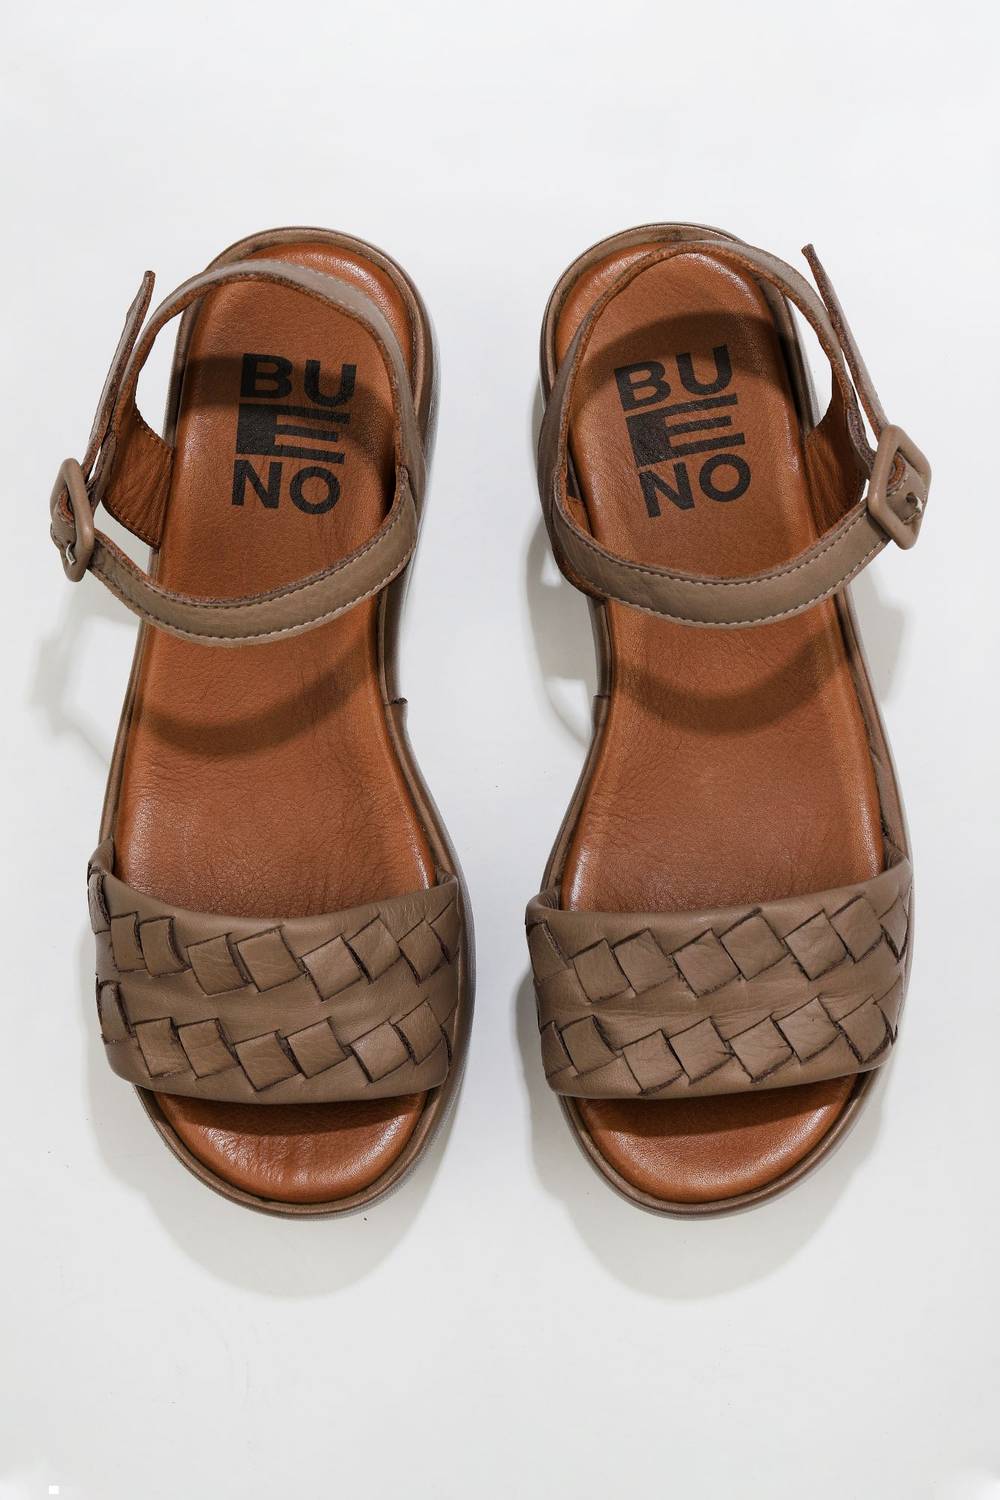 Bueno Shoes Women's Wedge Heel Sandals 01WU6000